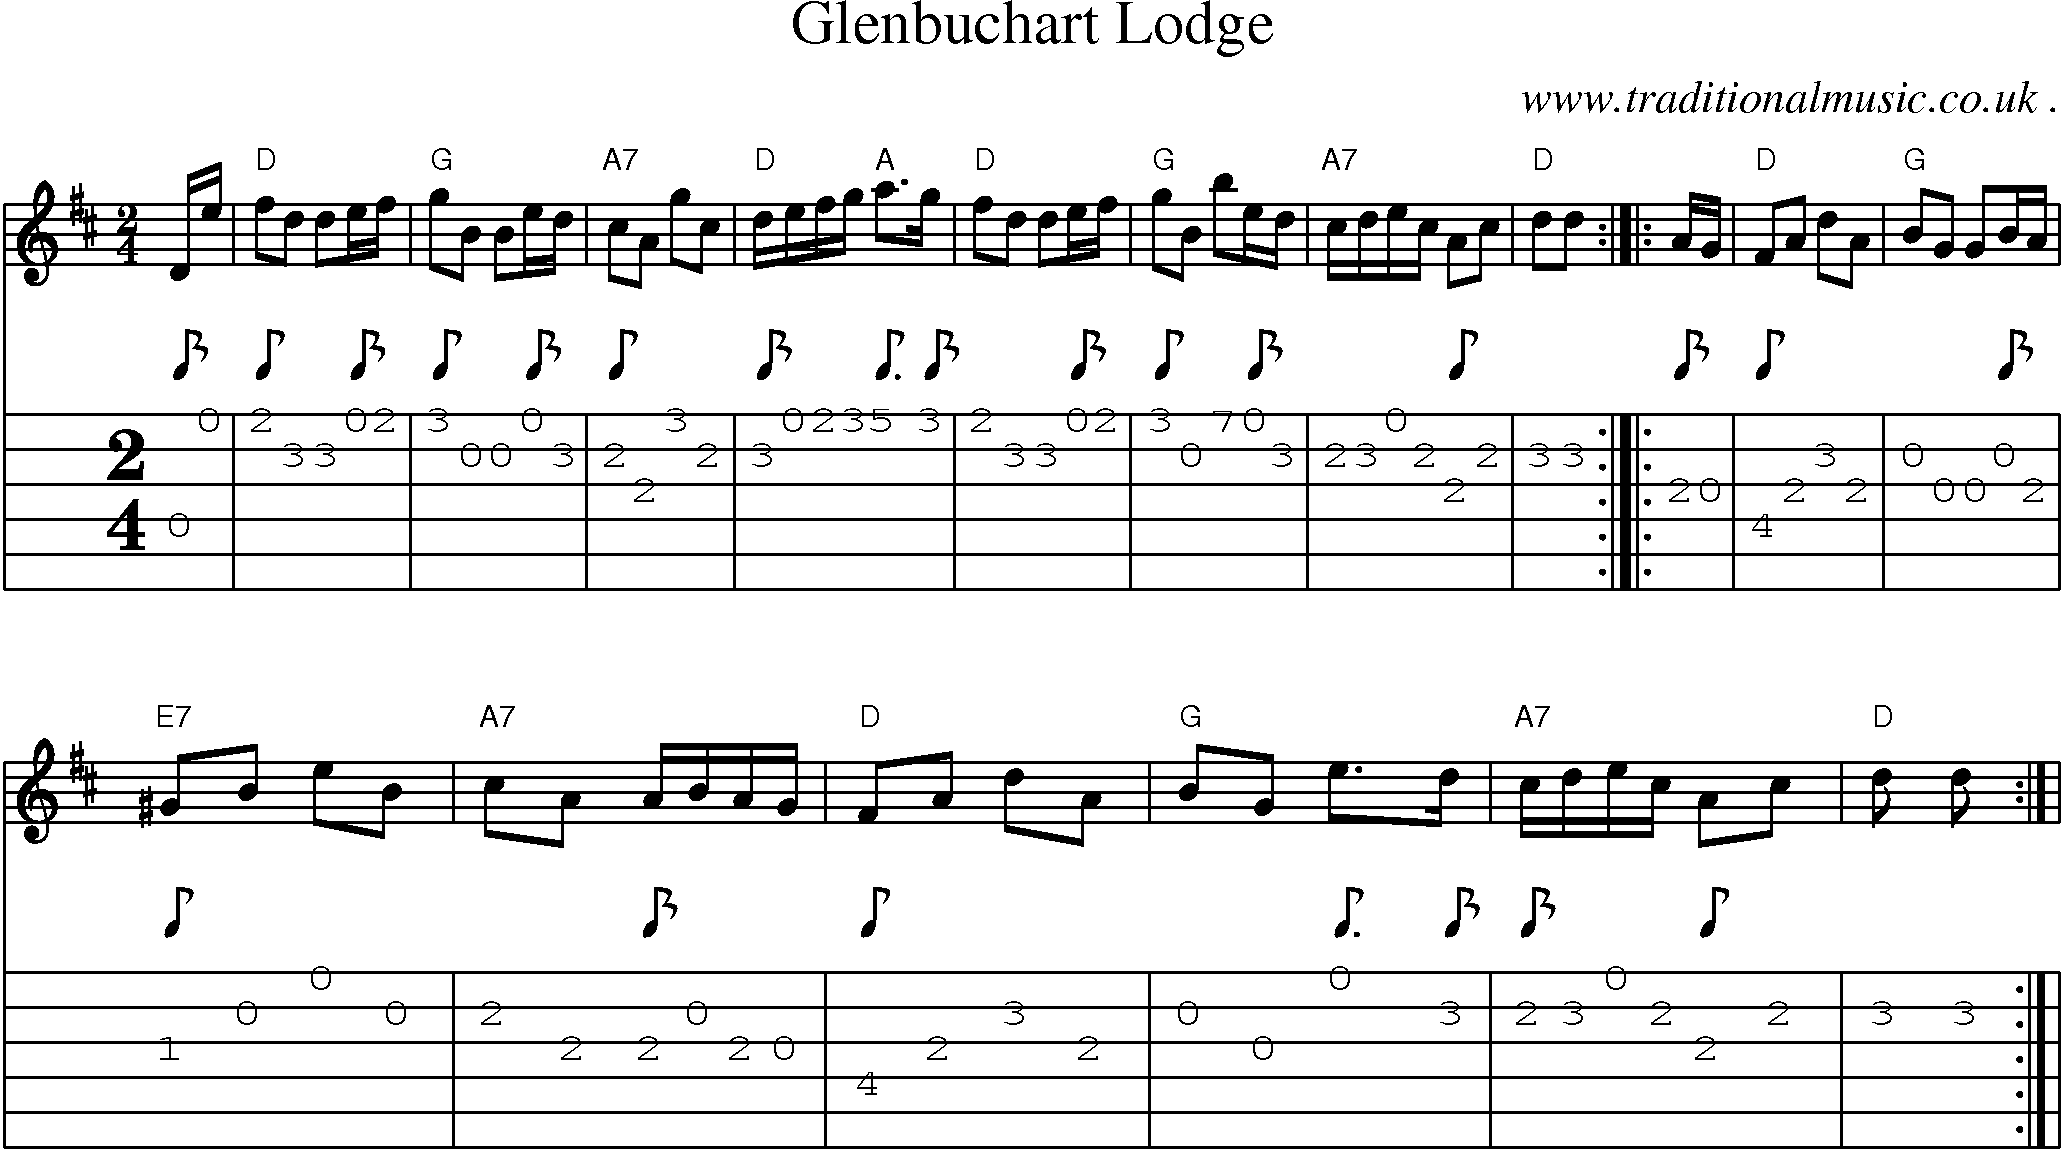 Sheet-music  score, Chords and Guitar Tabs for Glenbuchart Lodge